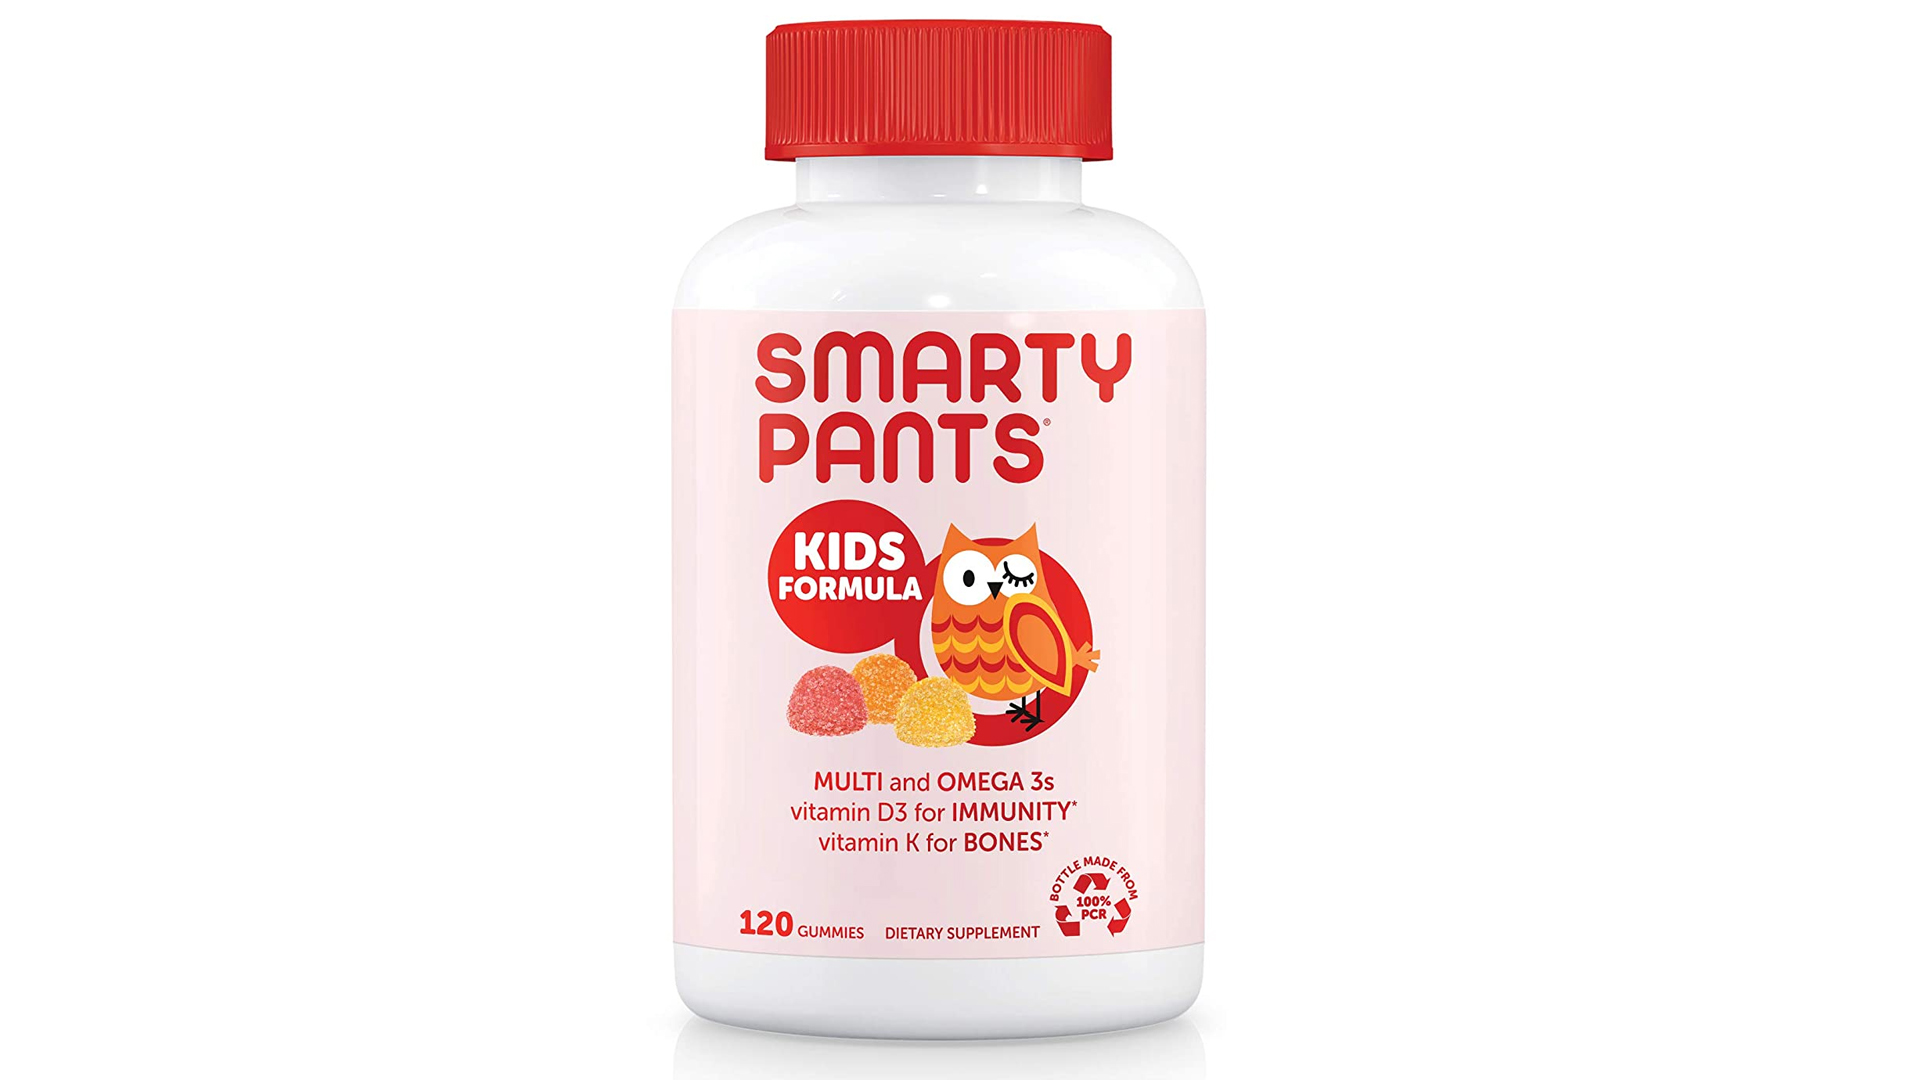 Smartypants vitamin D supplement